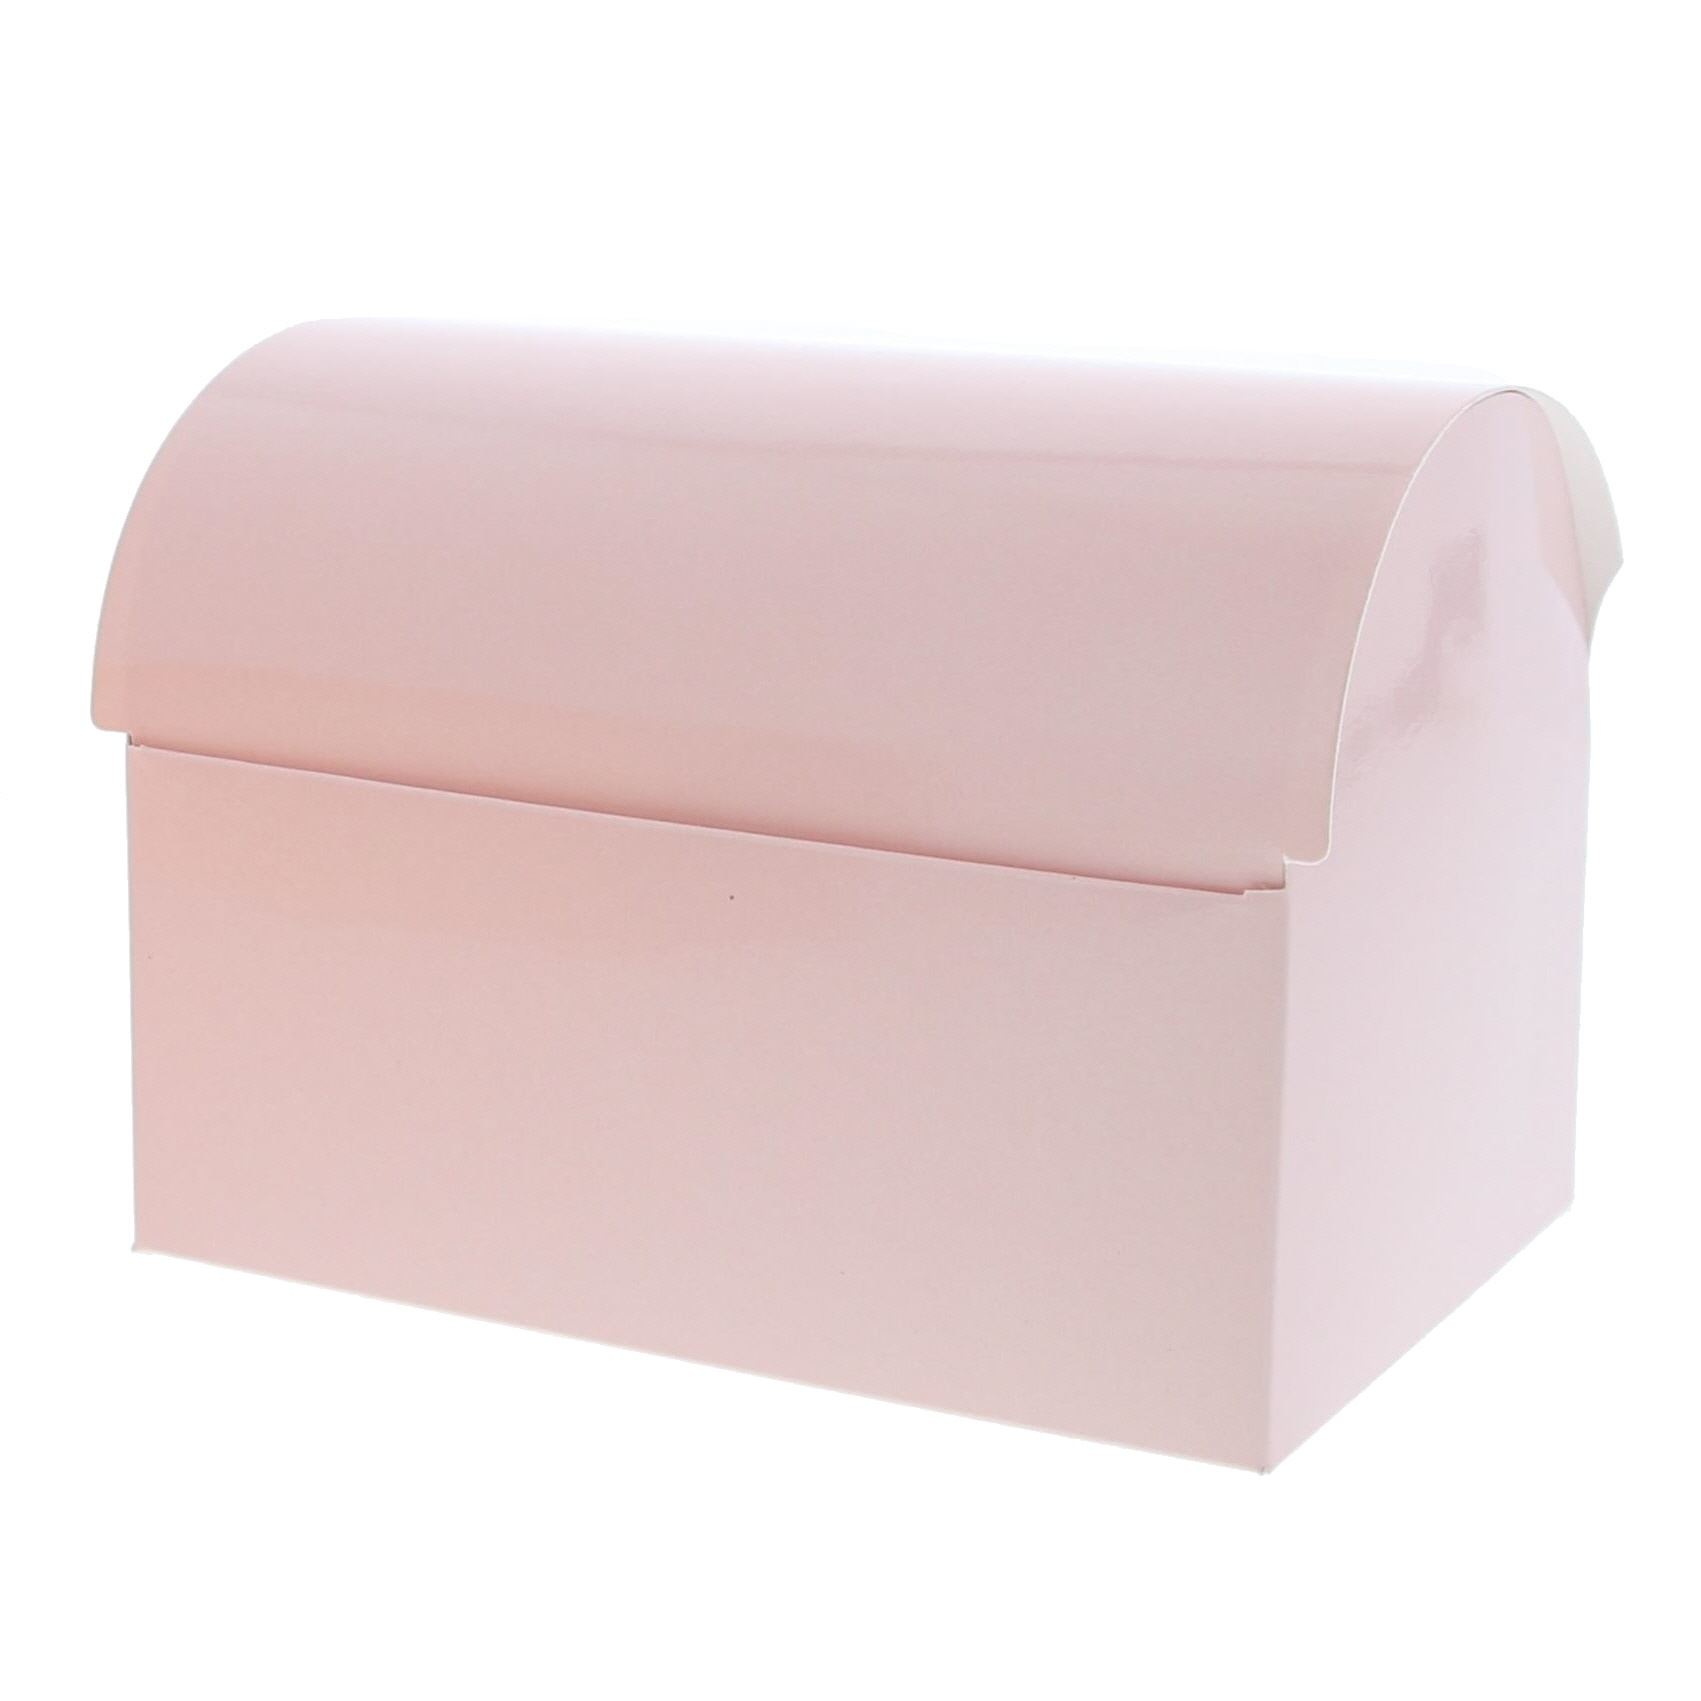 Treasure box - 500 gr. - 25 pieces - Light Pink